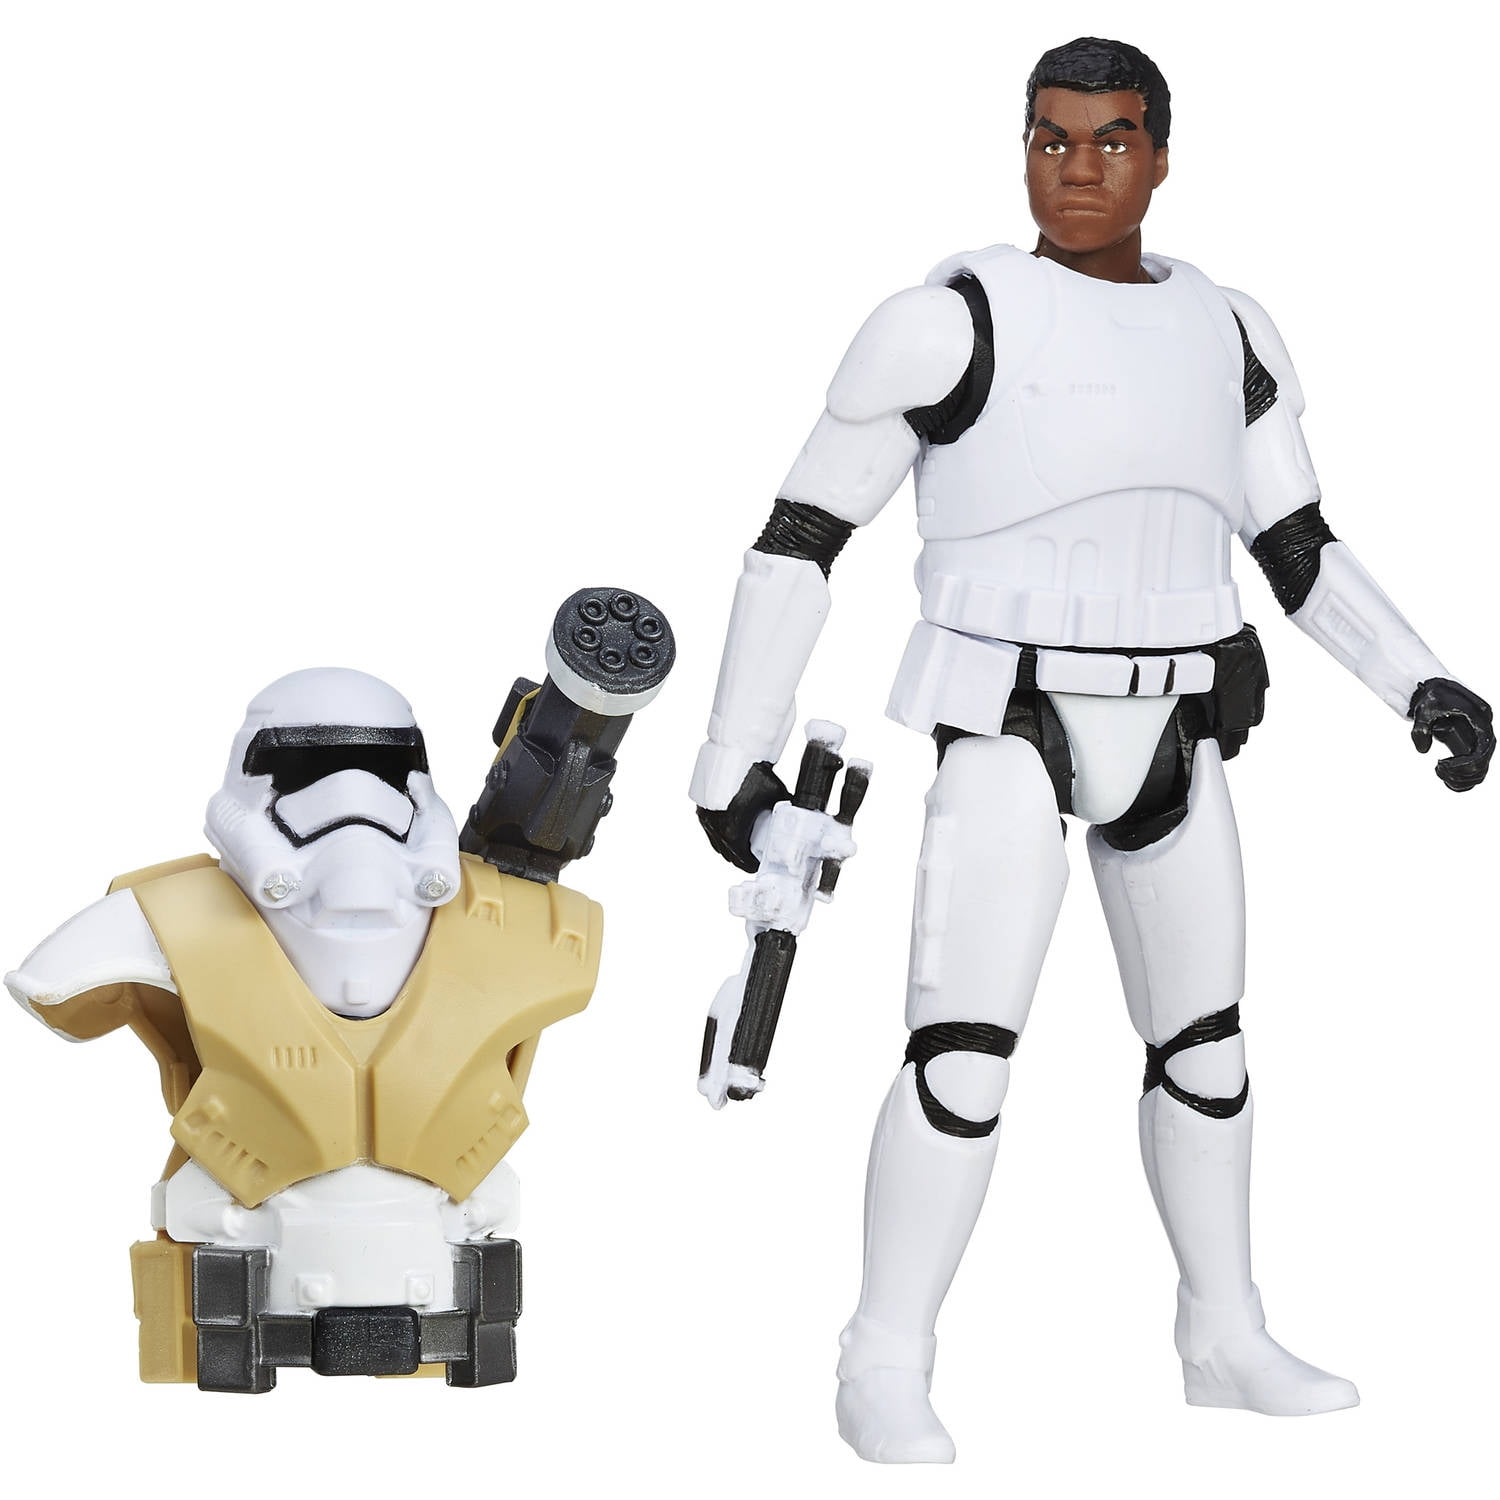 Star Wars The Force Awakens 3.75 Desert Mission Finn Action Figure Kid Toy 4inch for sale online 